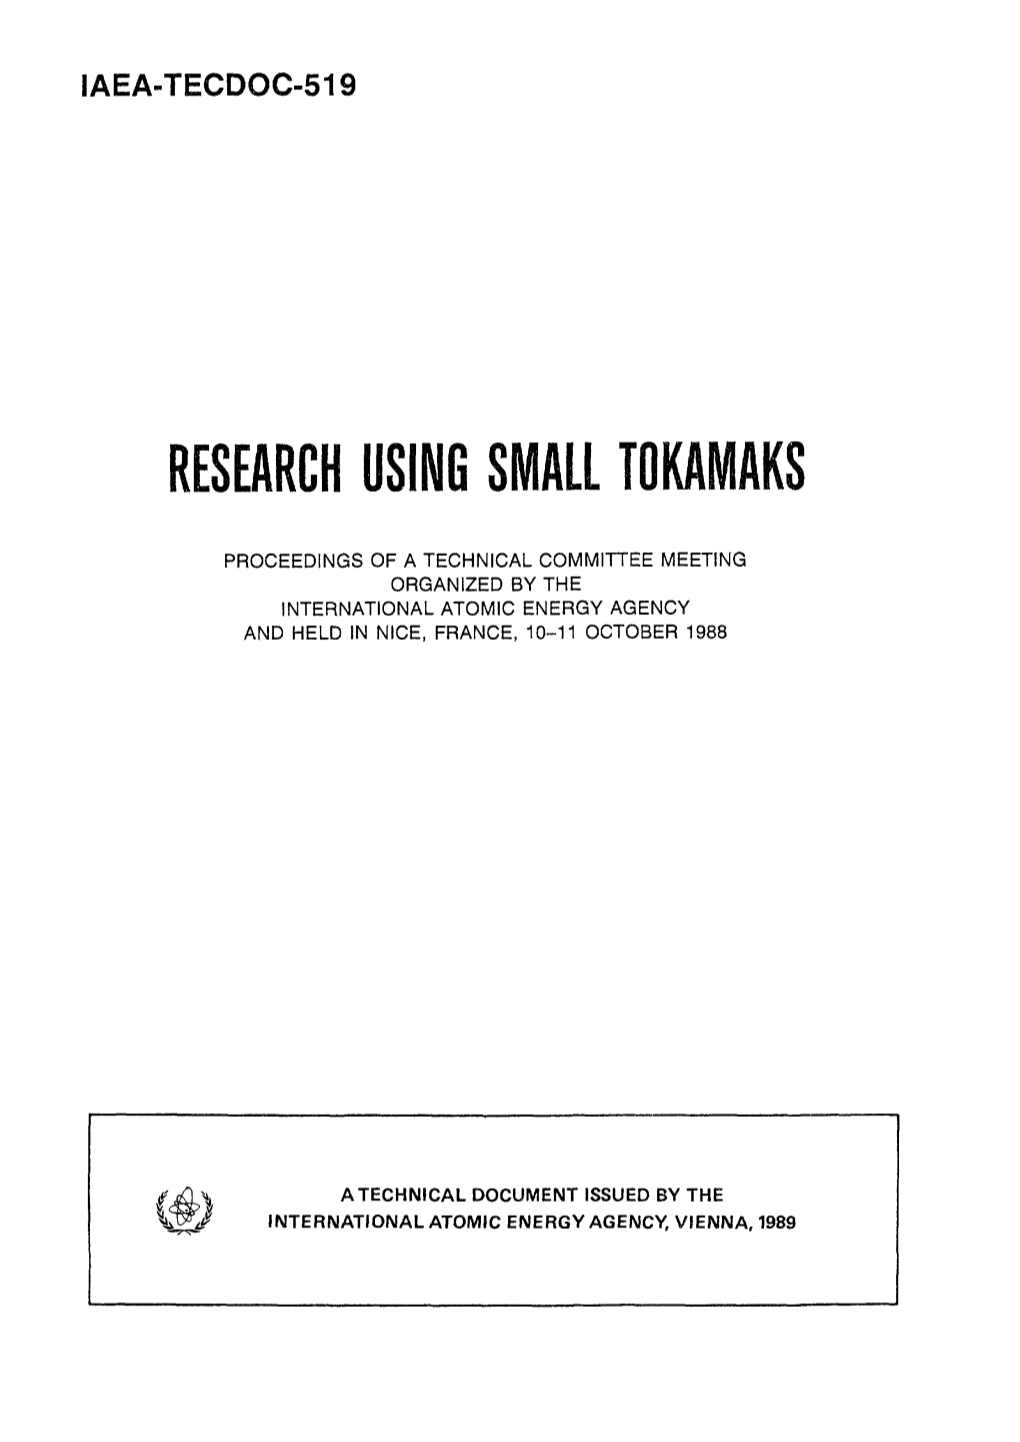 Research Using Small Tokamaks